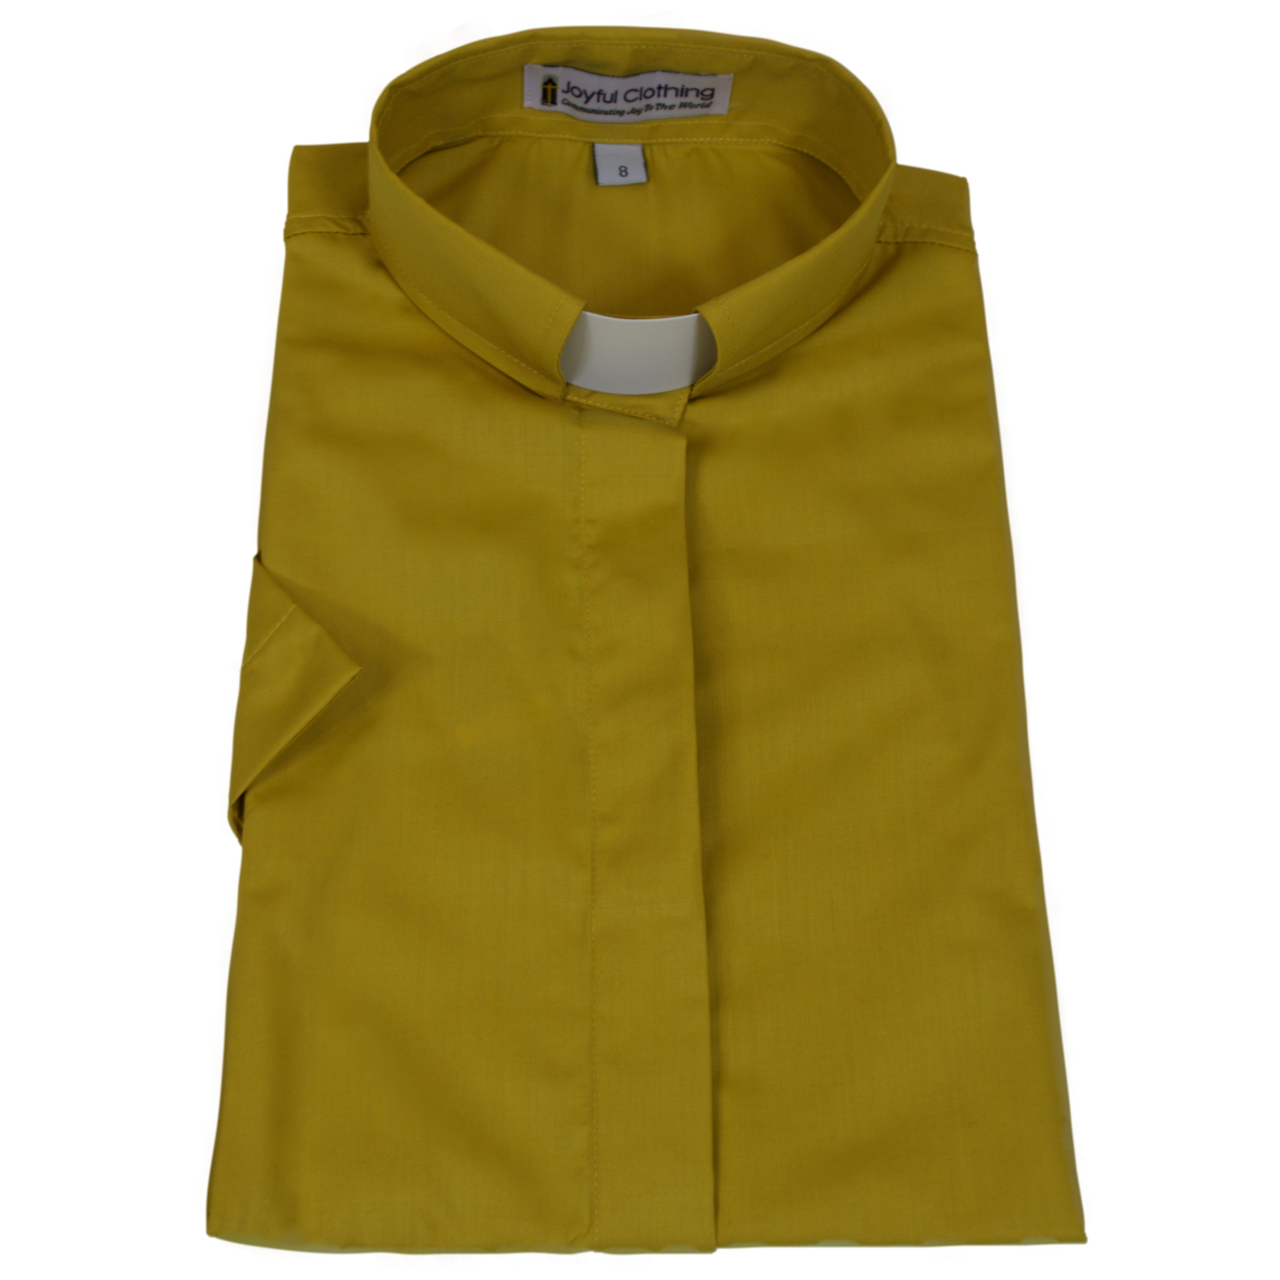 585. Women's Short-Sleeve Tab-Collar Clergy Shirt - Church Gold